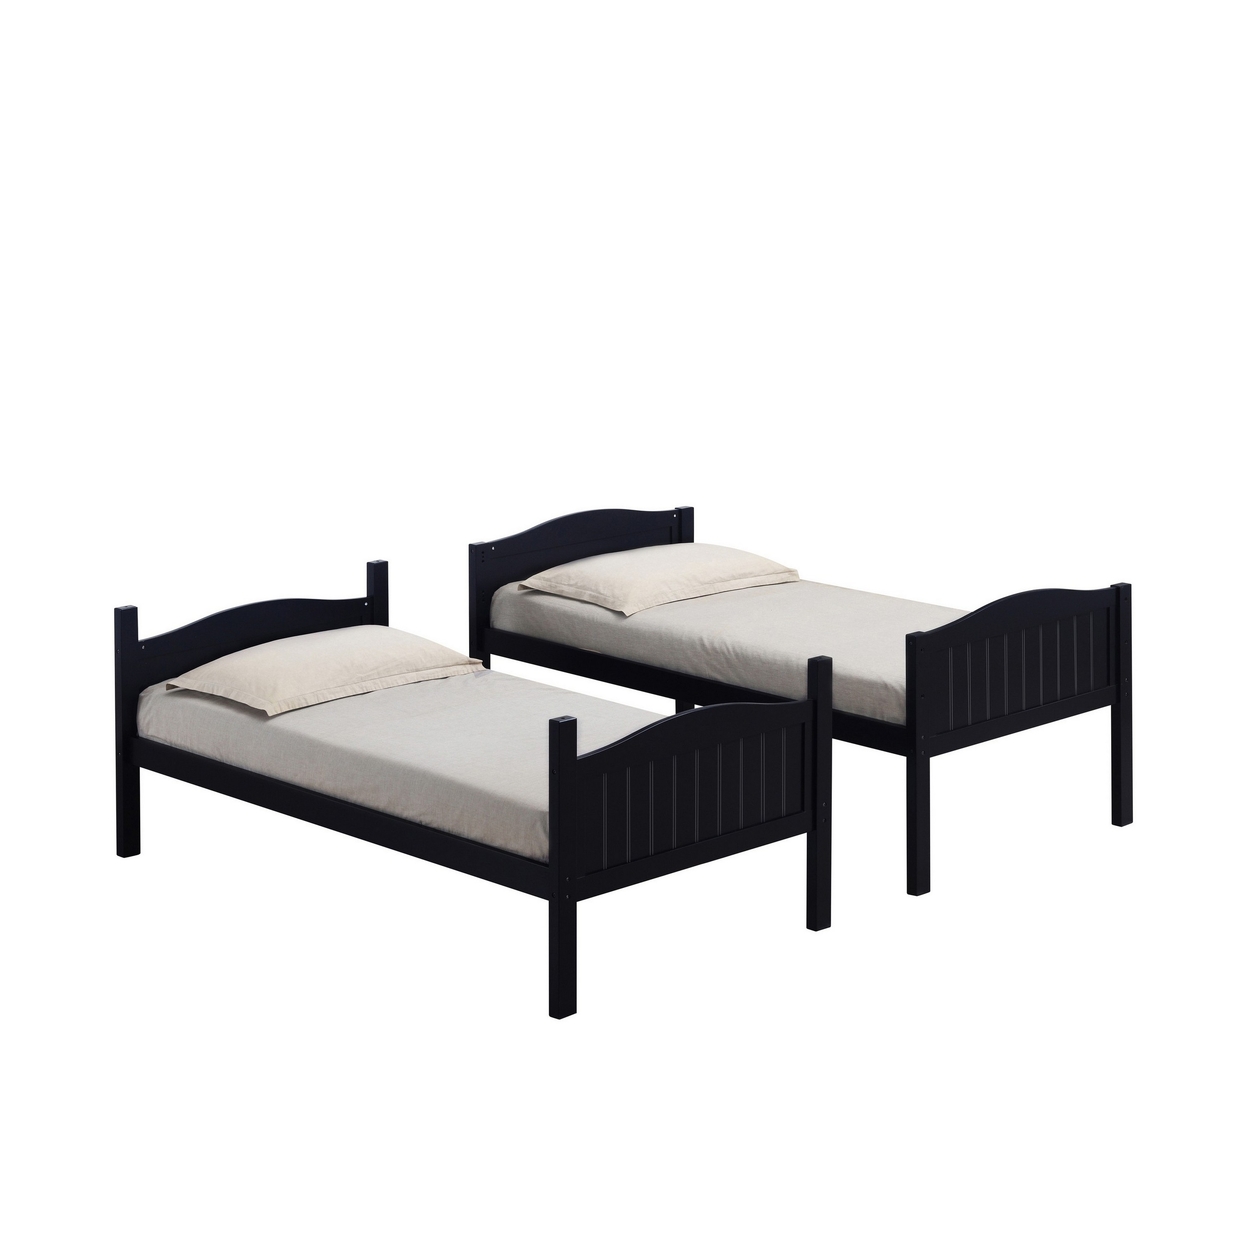 Mok Wood Twin Bunk Bed With Ladder And Guardrail, Farm Plank Style, Black- Saltoro Sherpi